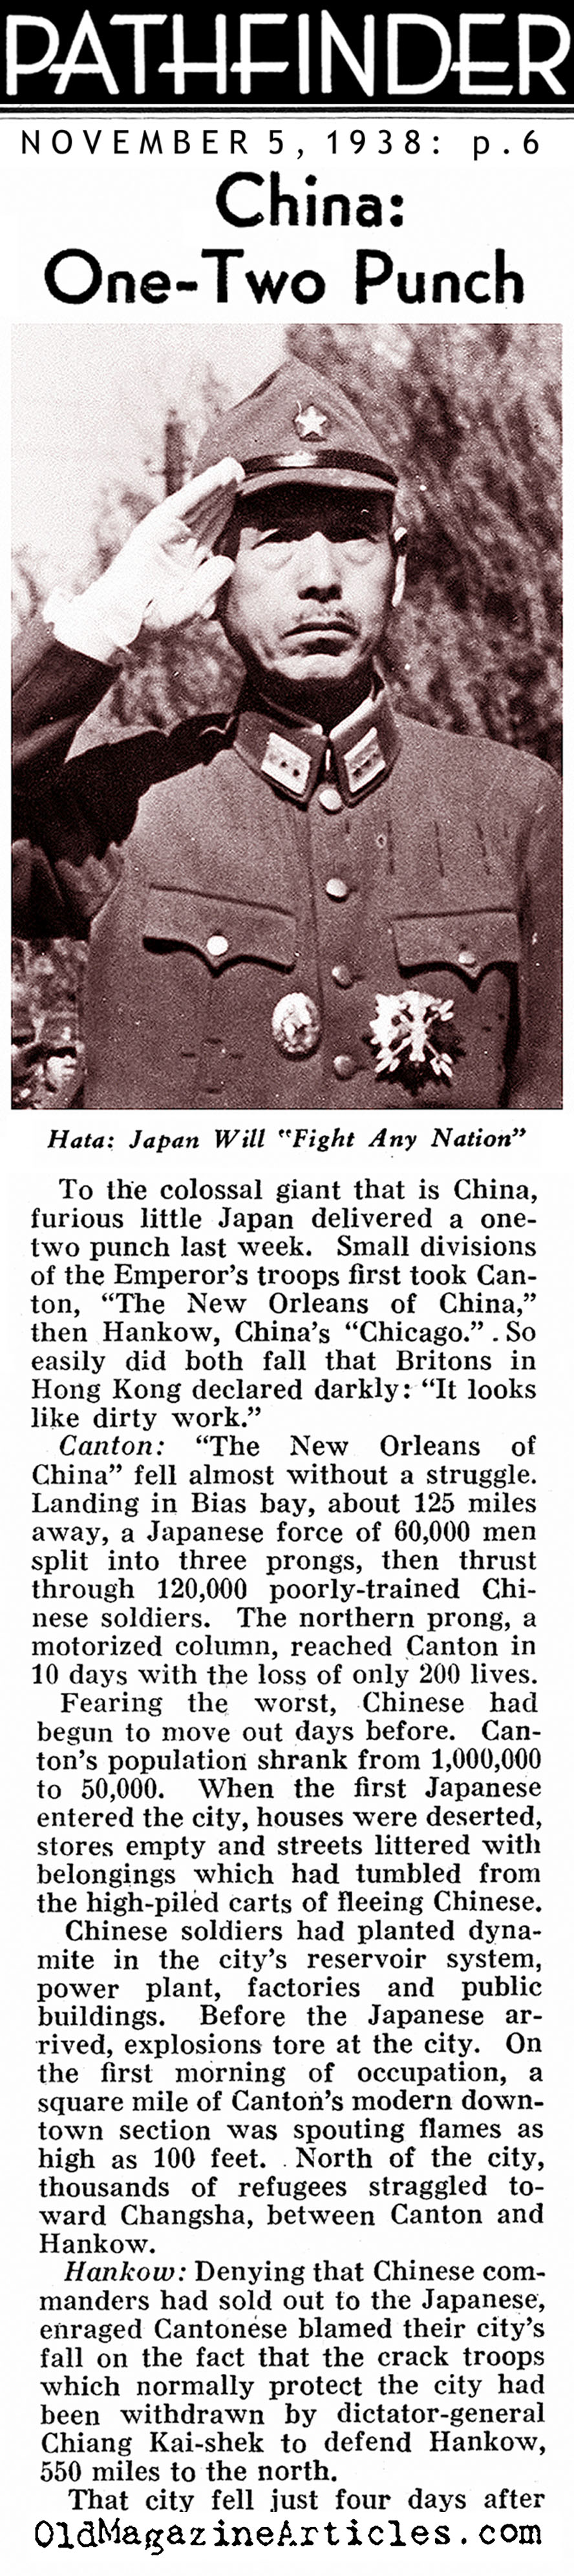 Japan On The March (Pathfinder Magazine, 1938)